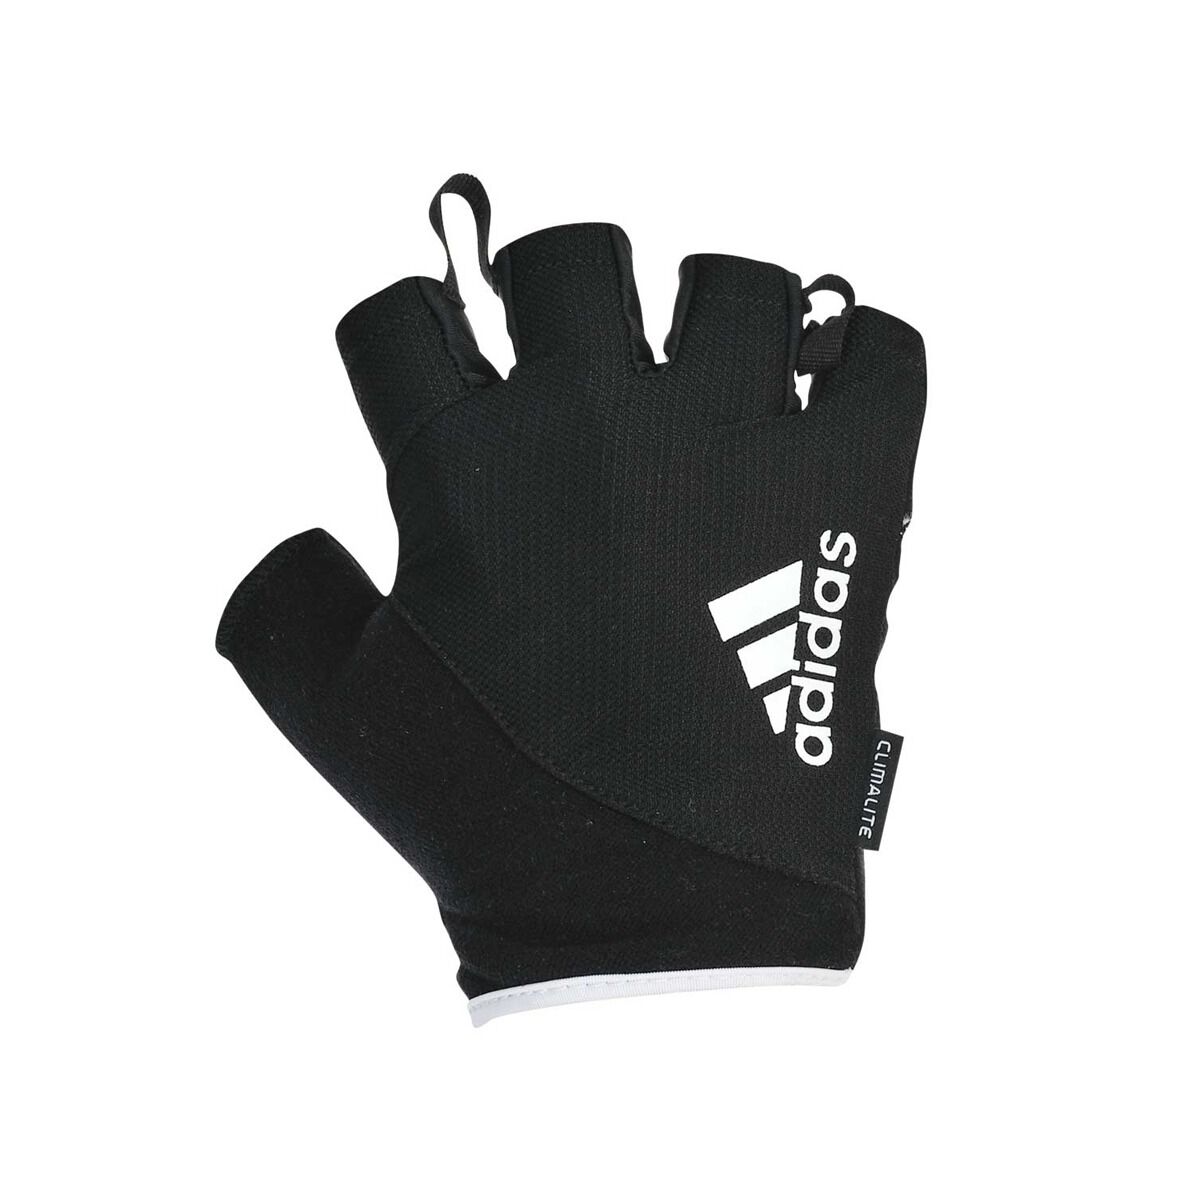 adidas training gloves